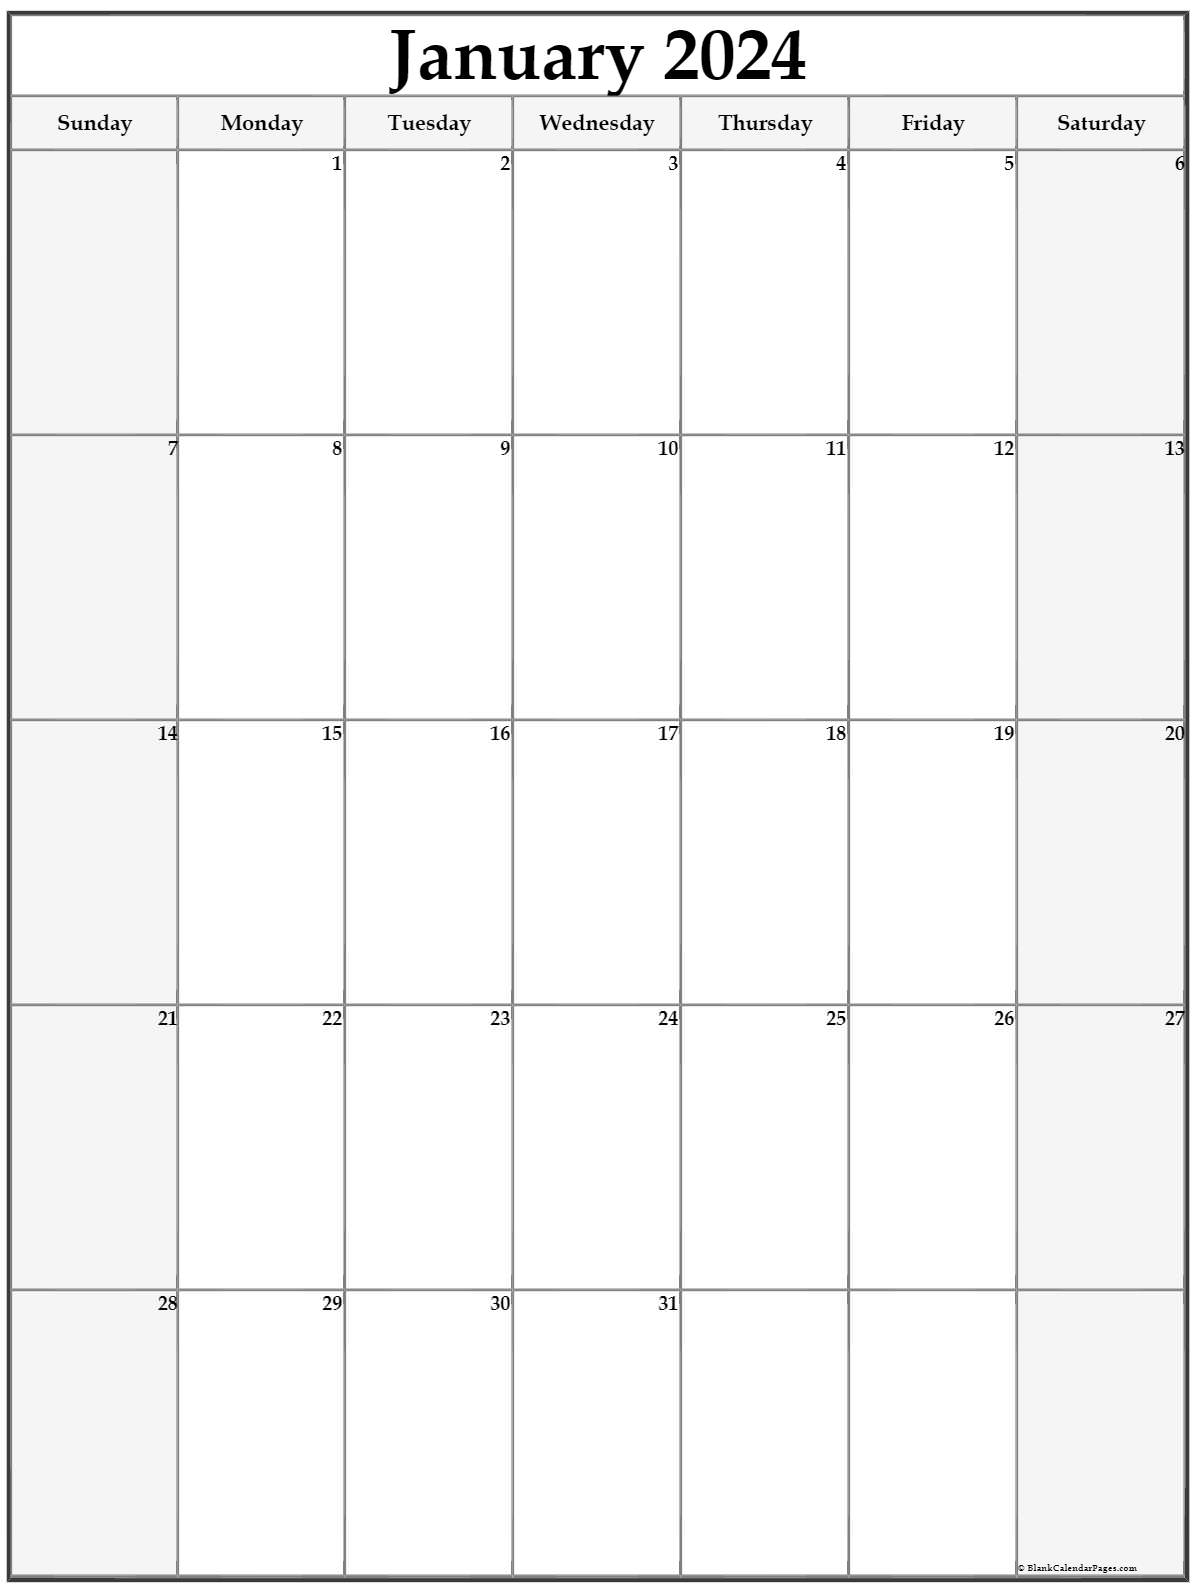 january-2023-vertical-calendar-handy-calendars-photos